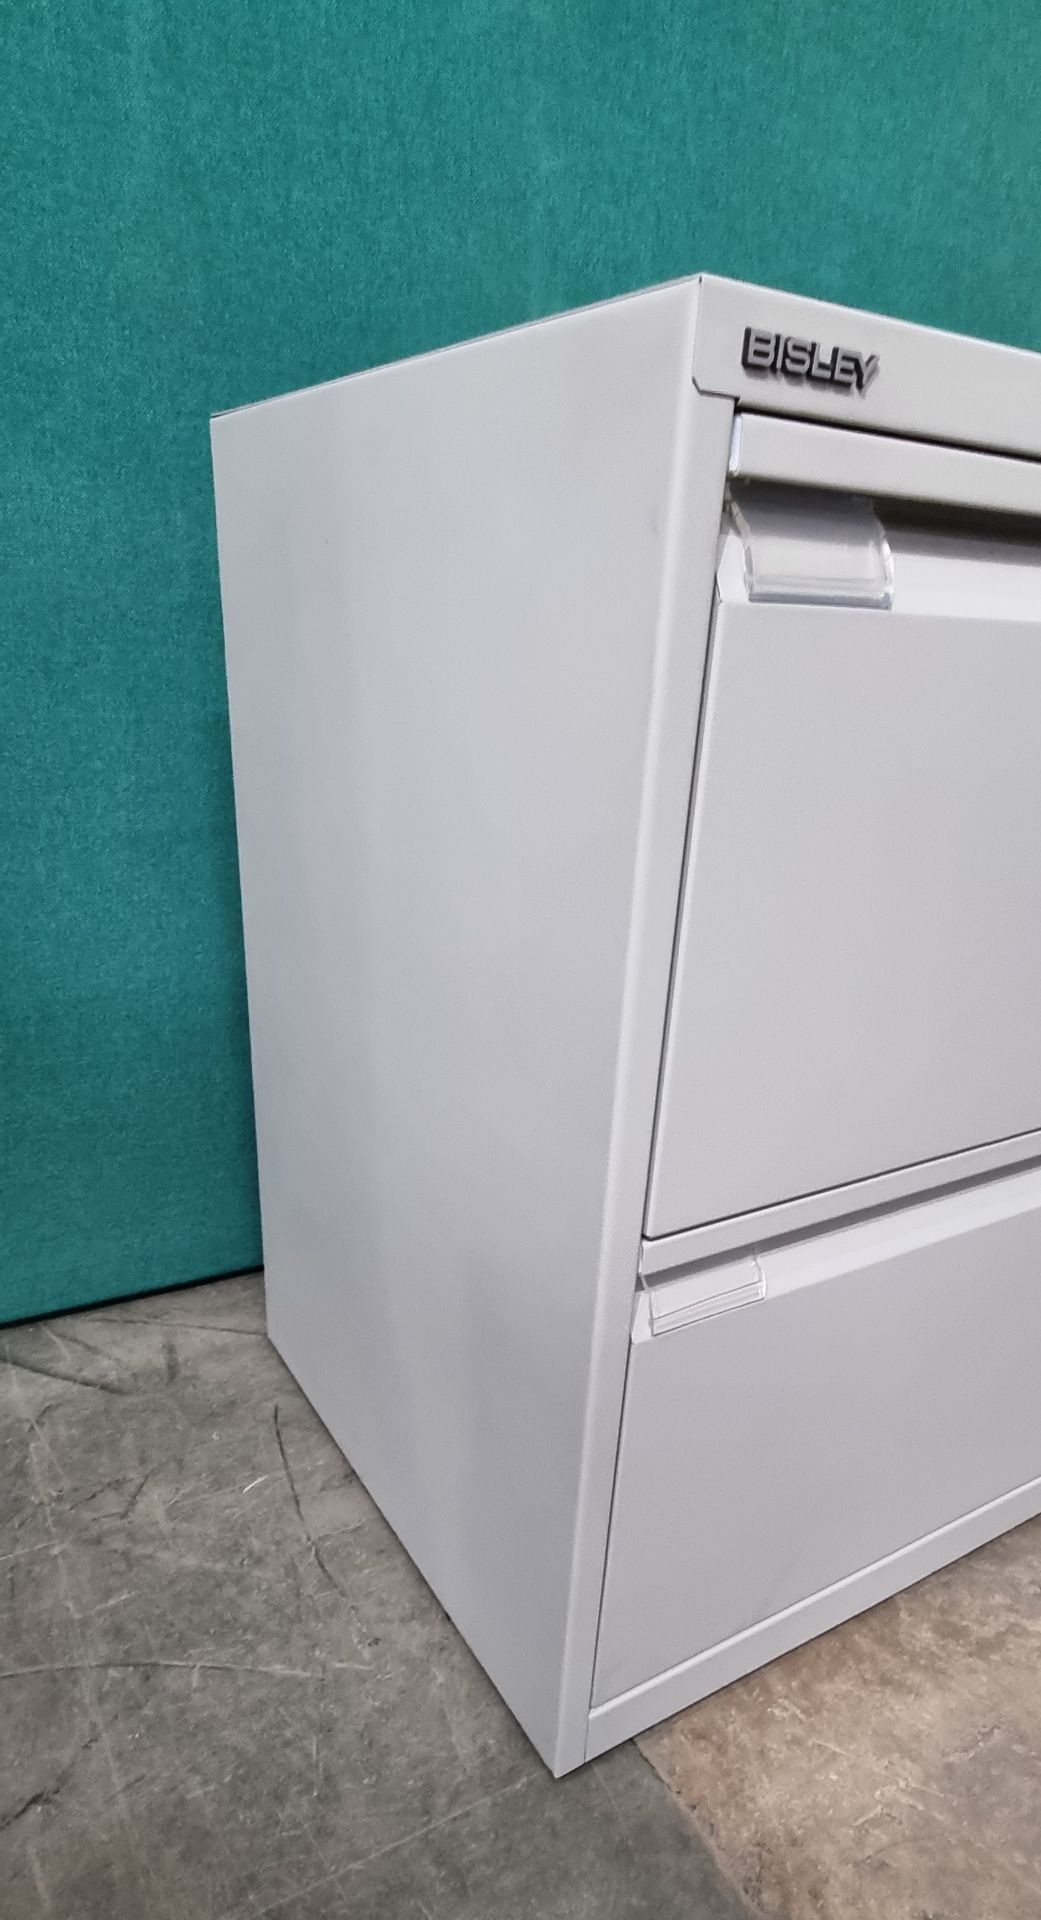 1 x Bisley 2 Drawer Filing Cabinet With Key Matt Grey 100mm x 690mm x 470mm - Image 4 of 9